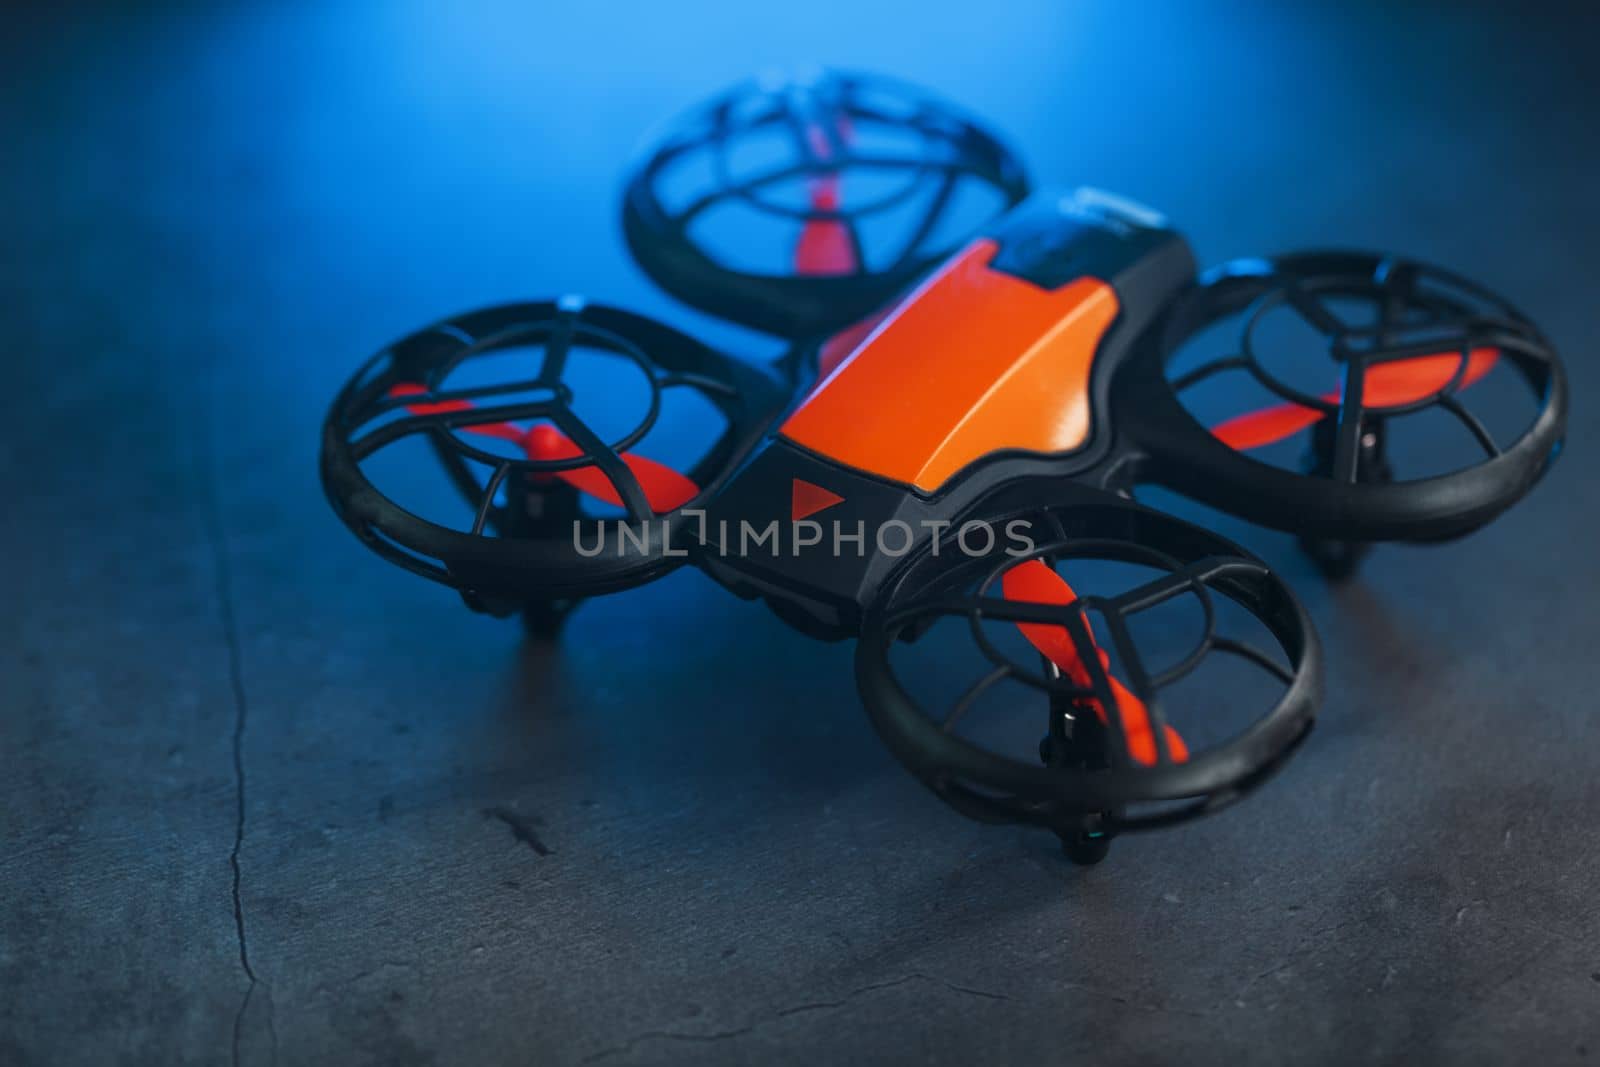 Orange quadcopter mini spy drone on a dark background with blue backlight by AlexGrec